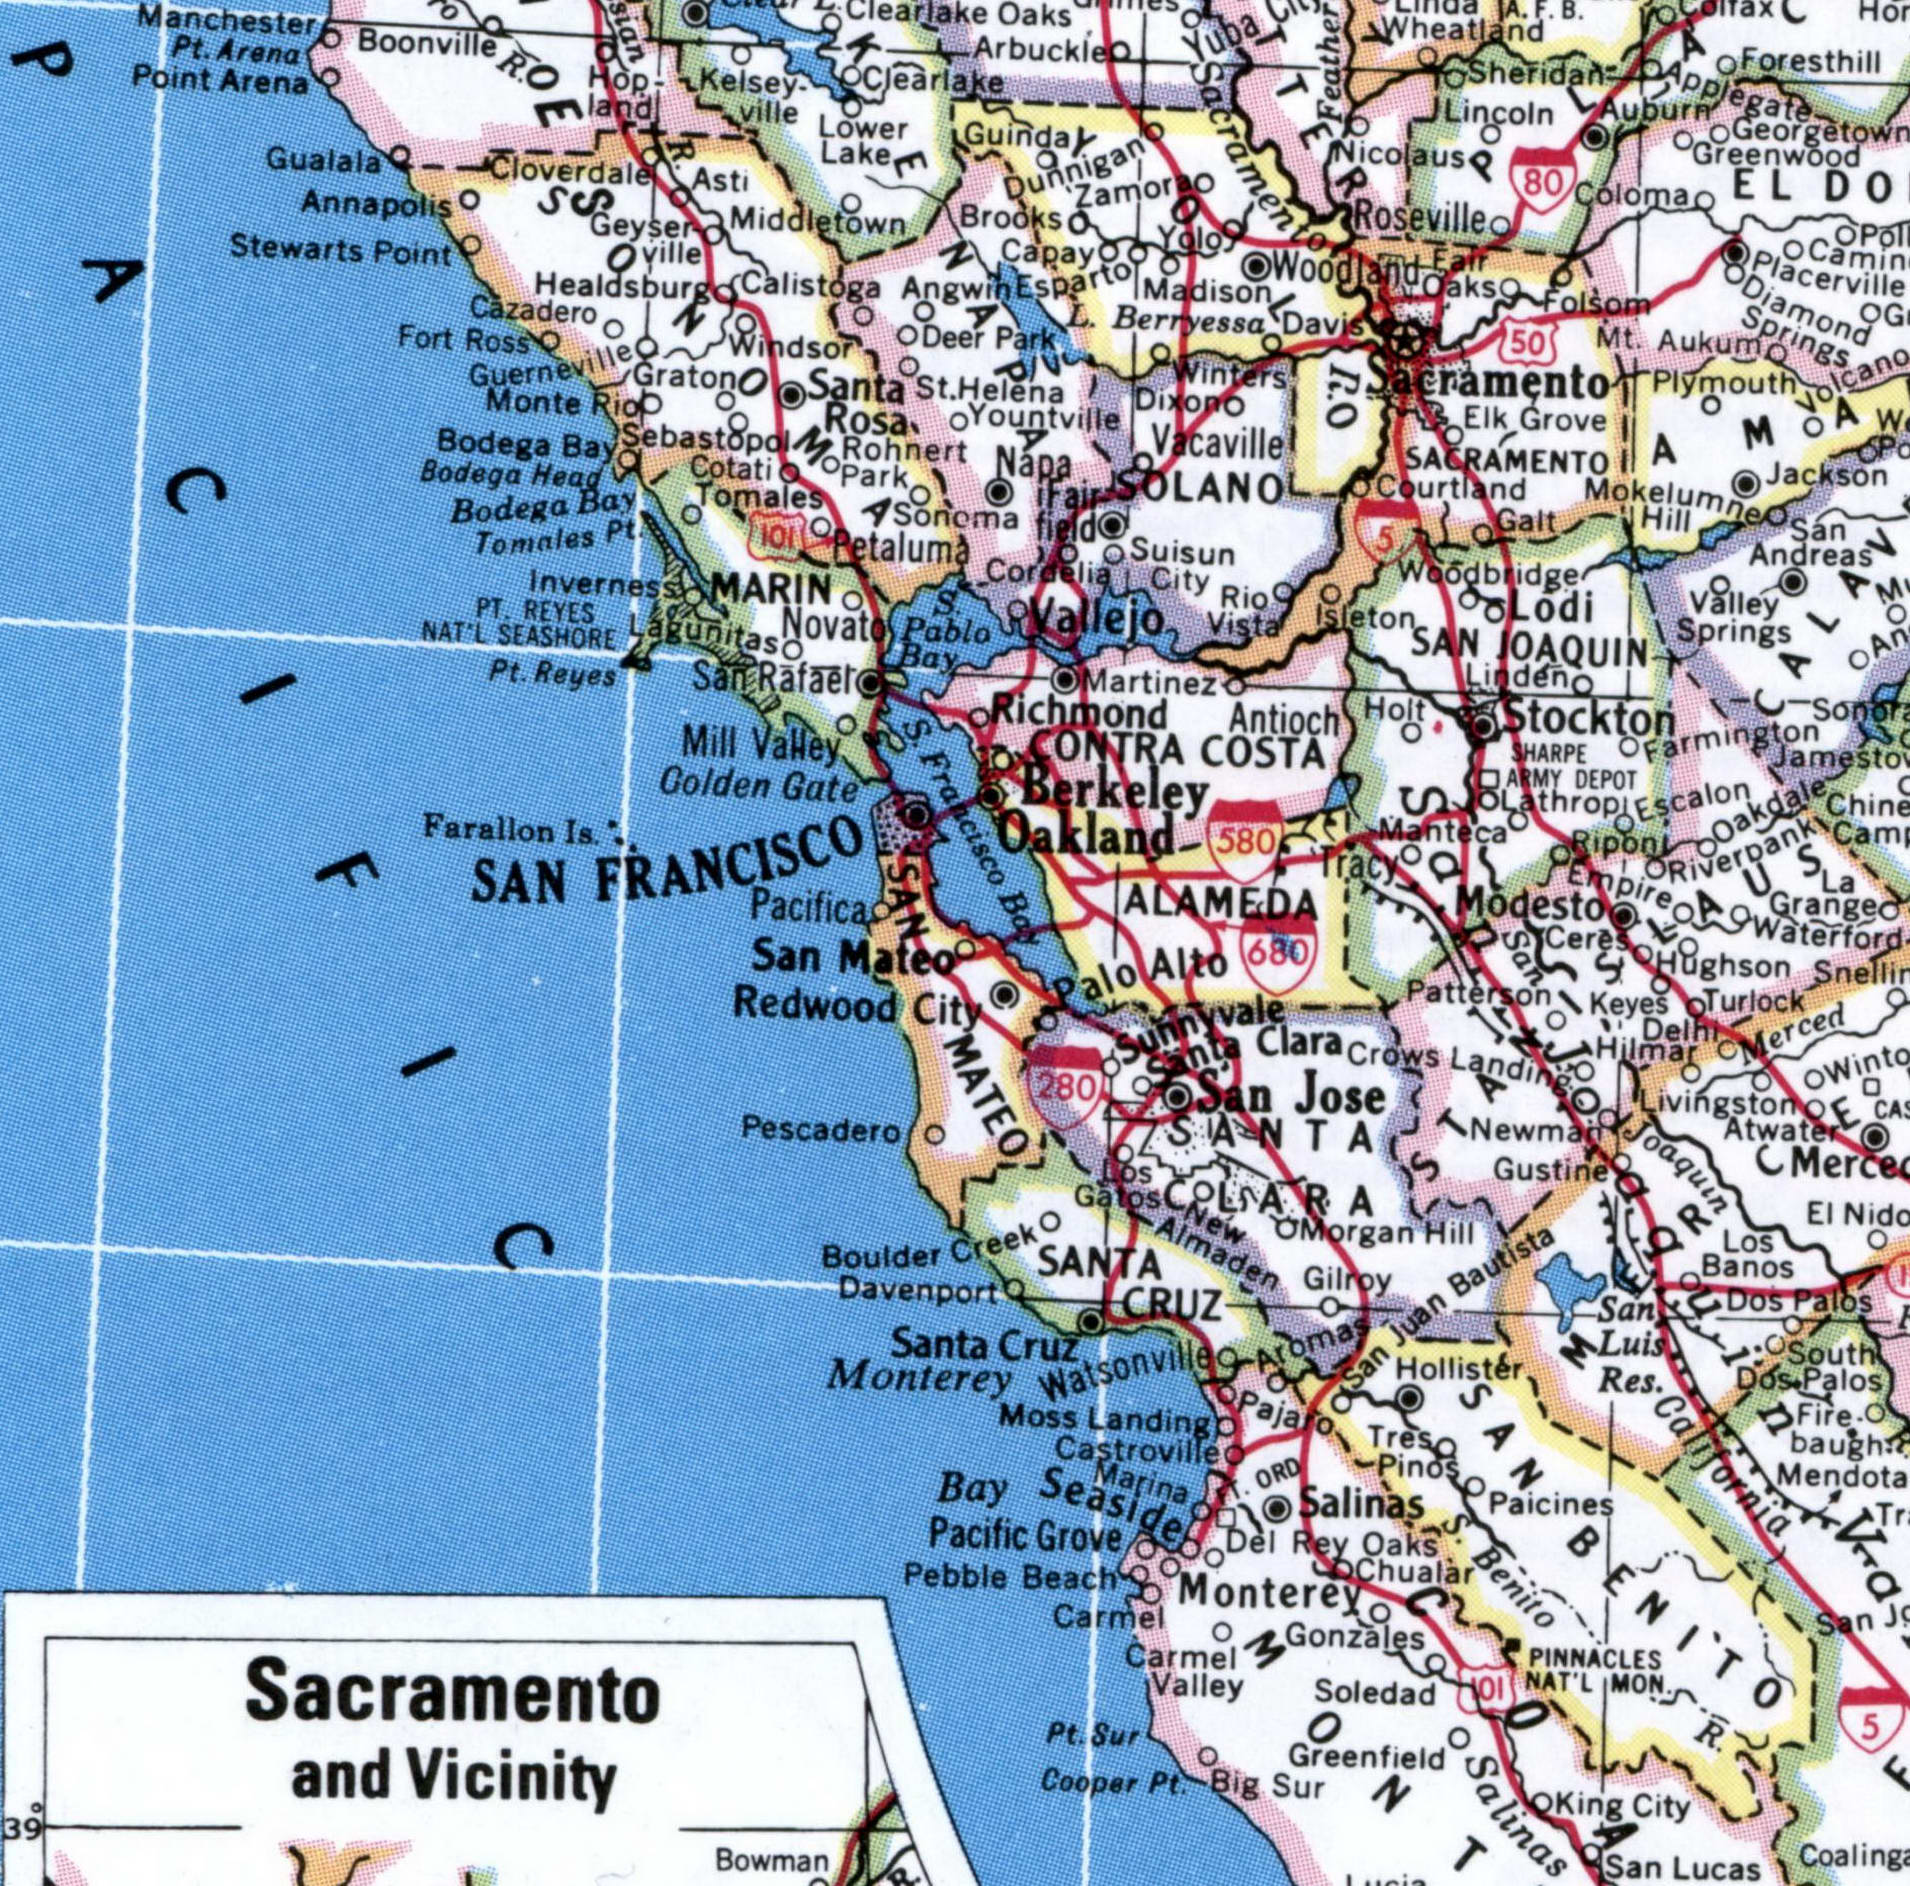 San Francisco Bay area region map